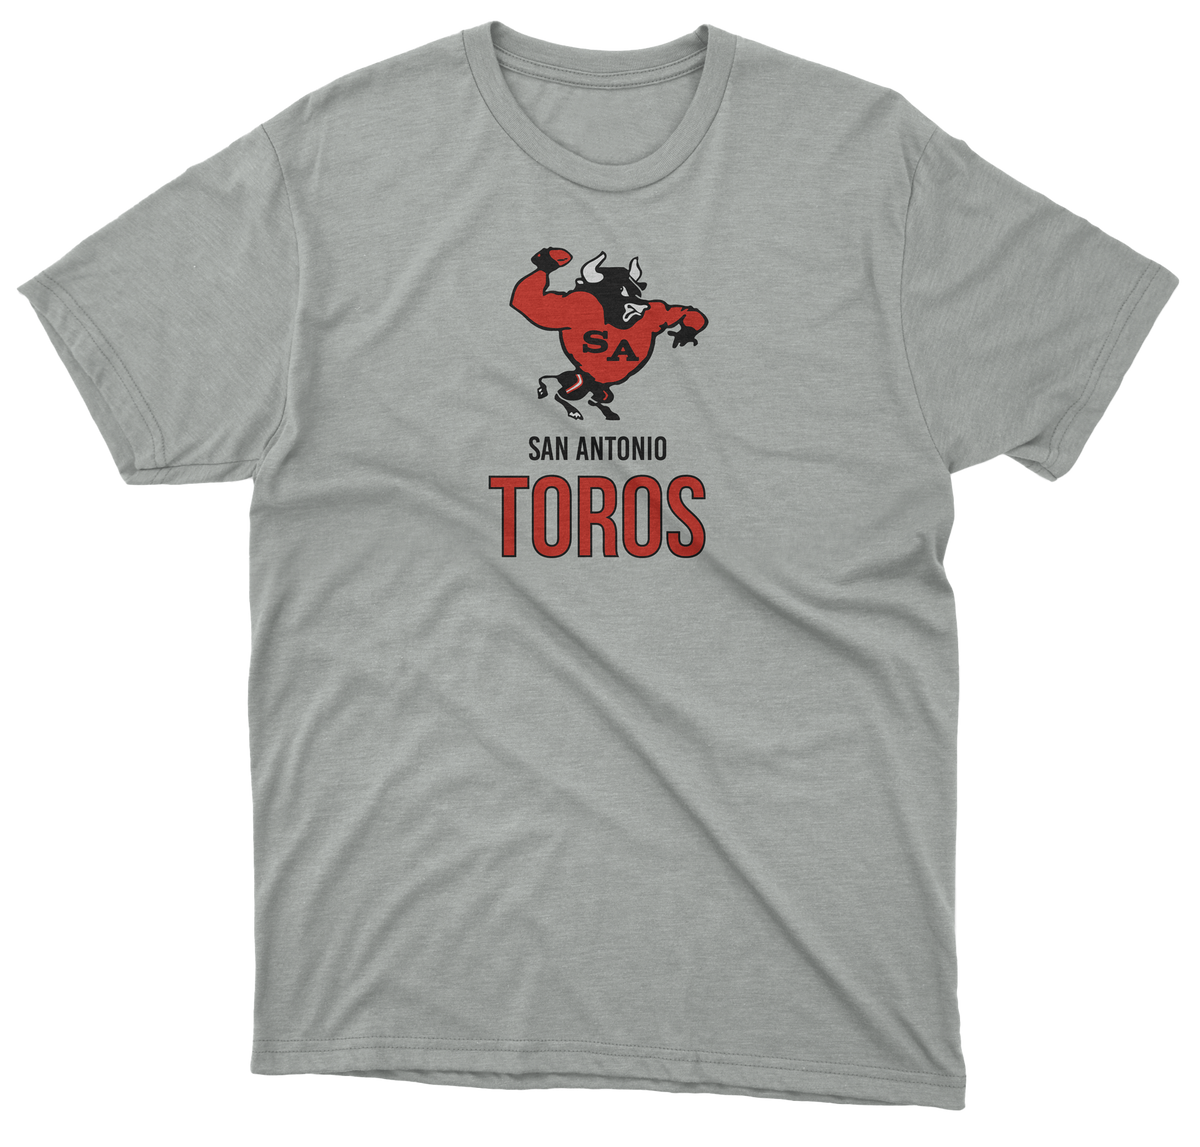 San Antonio Toros T-shirt record